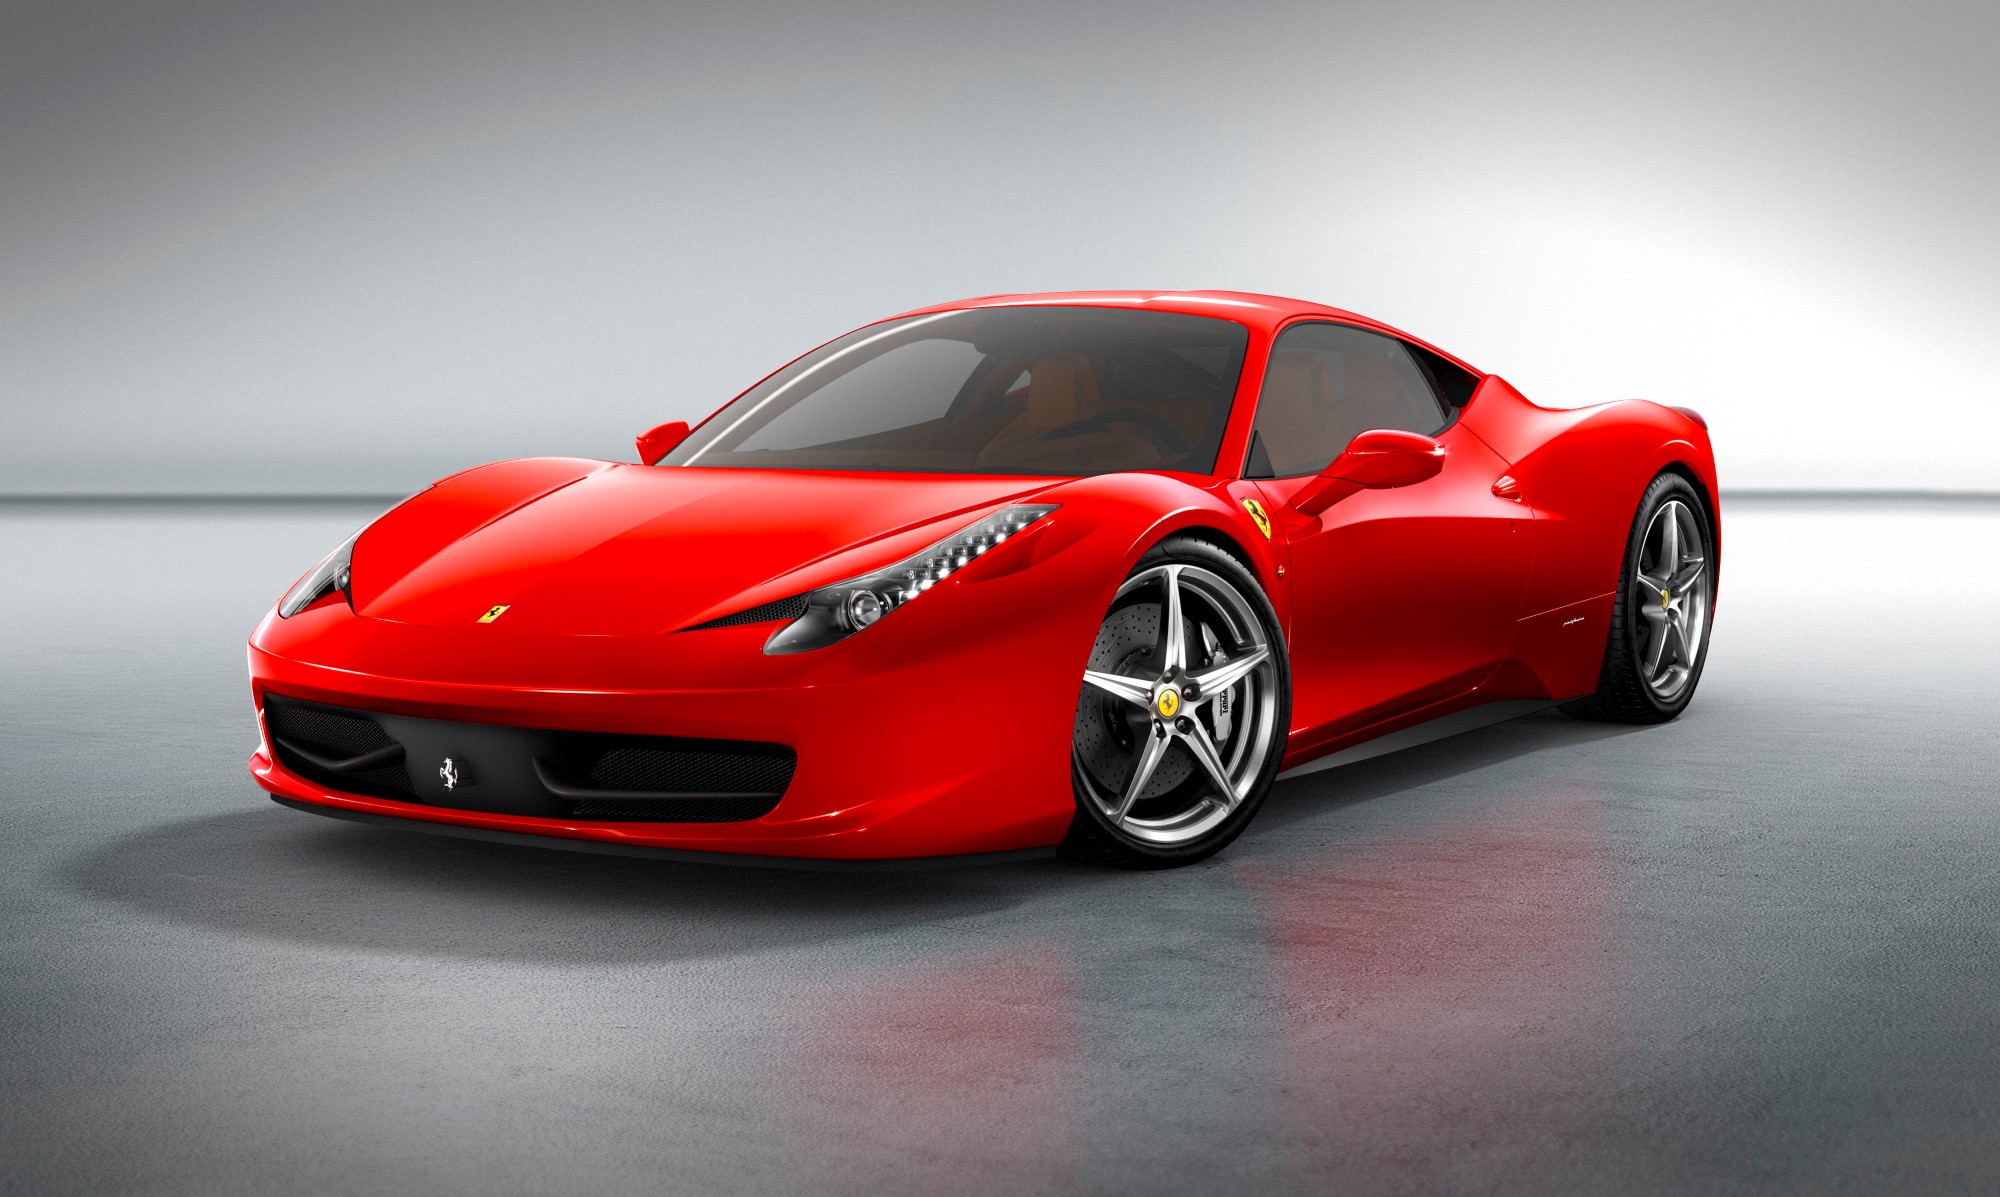 2014 Ferrari 458 Italia Summary Review - The Car Connection